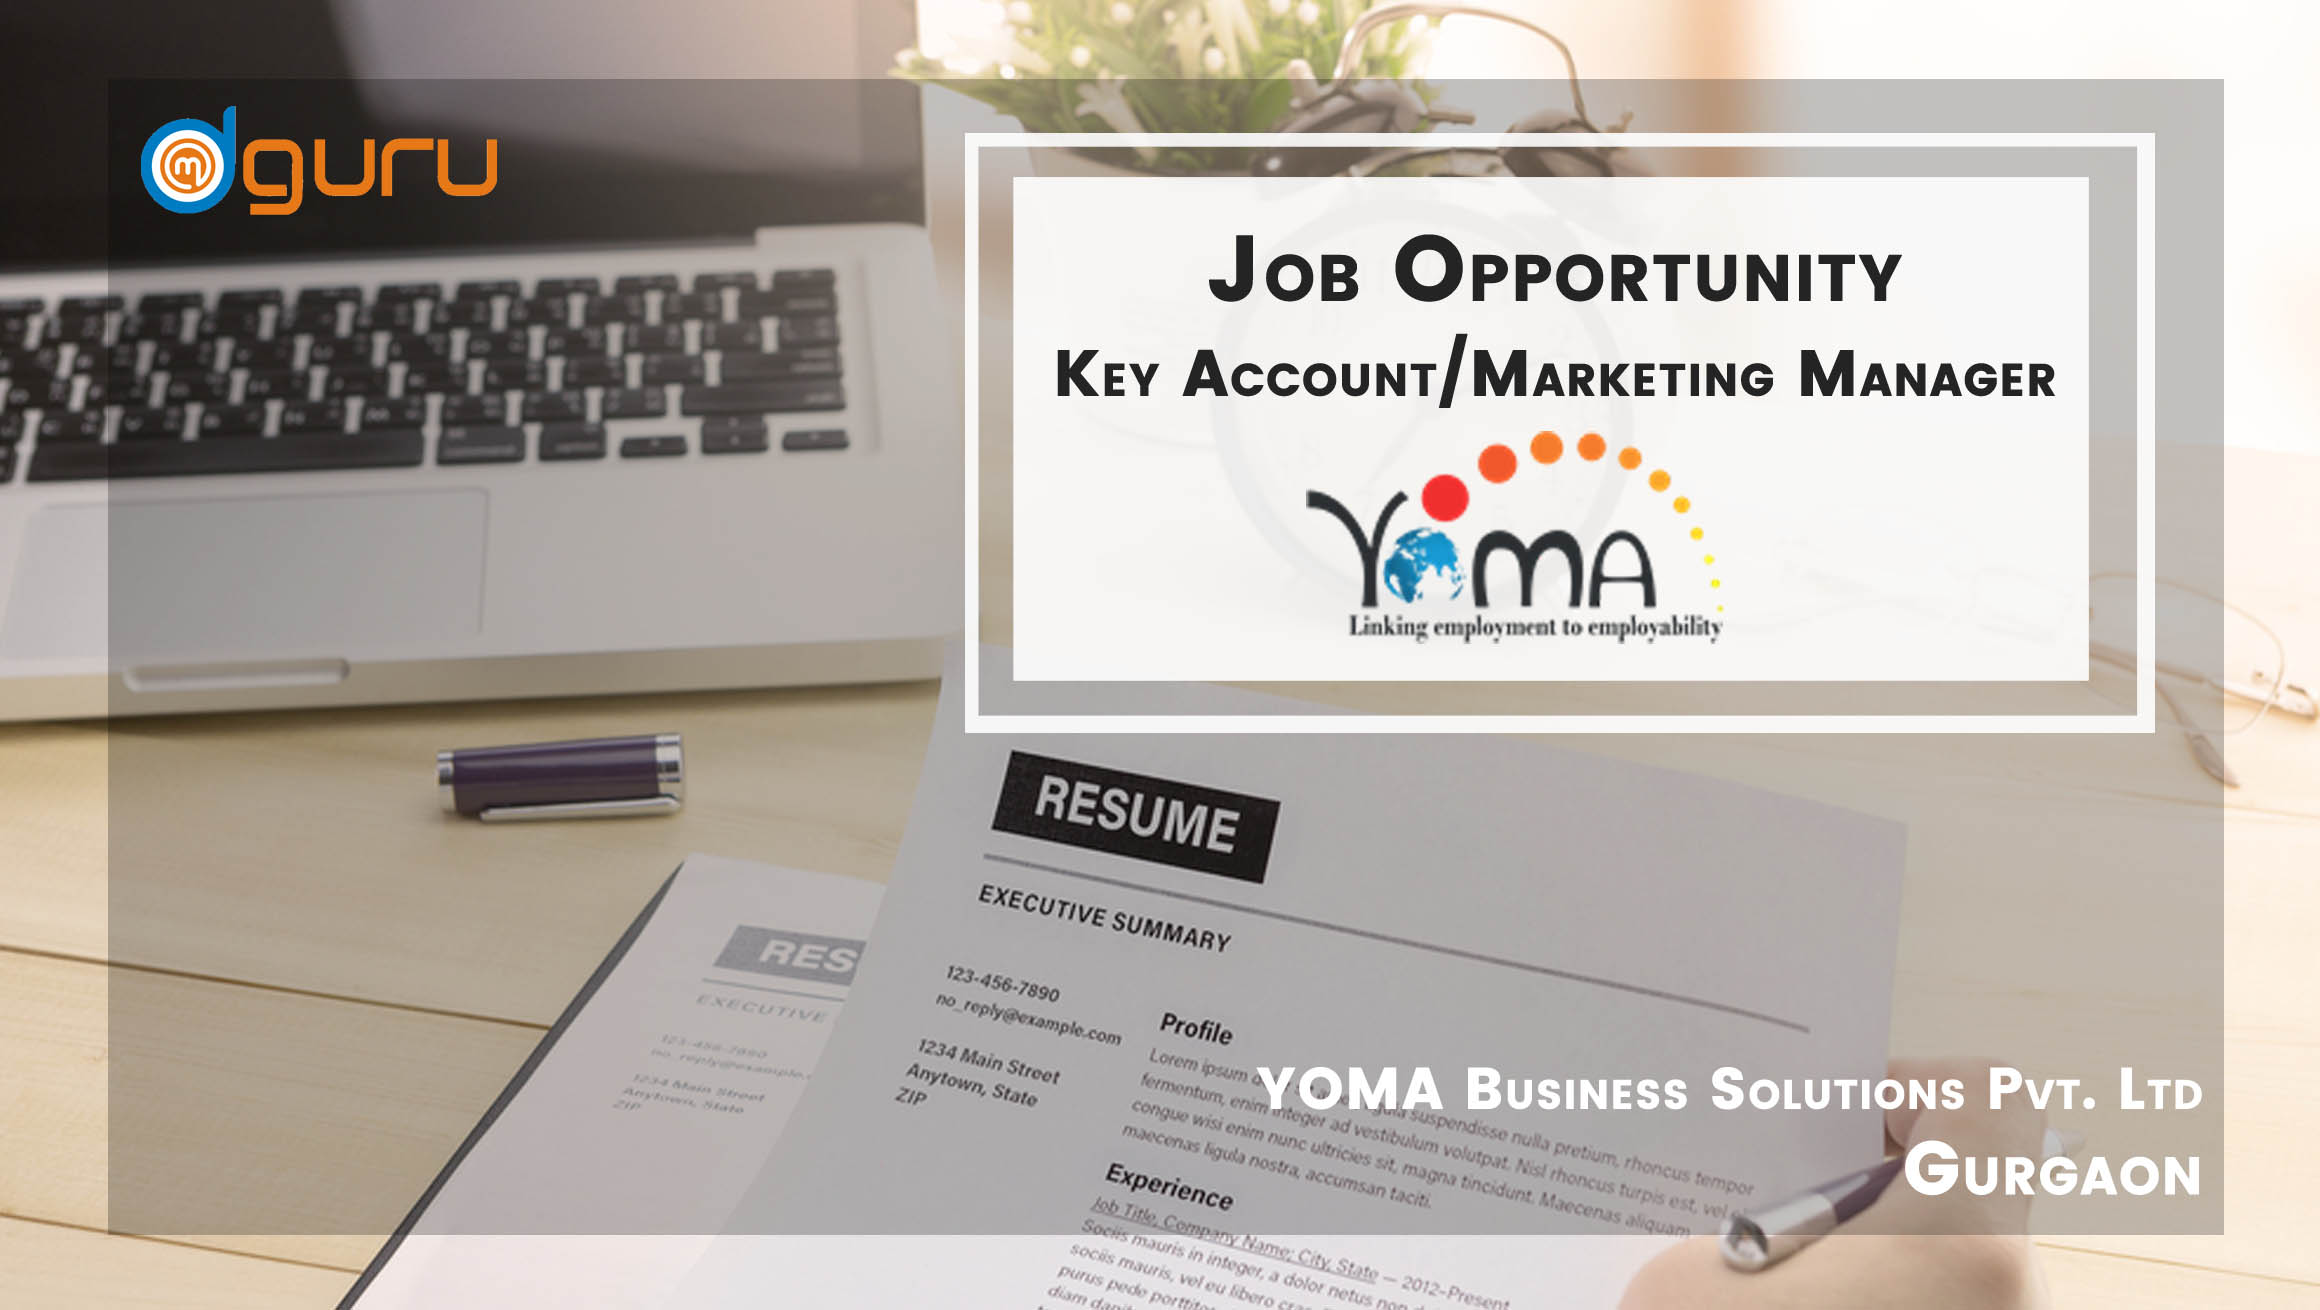 Key Account/Marketing Manager at YOMA Business Solutions Pvt. Ltd Gurgaon, India